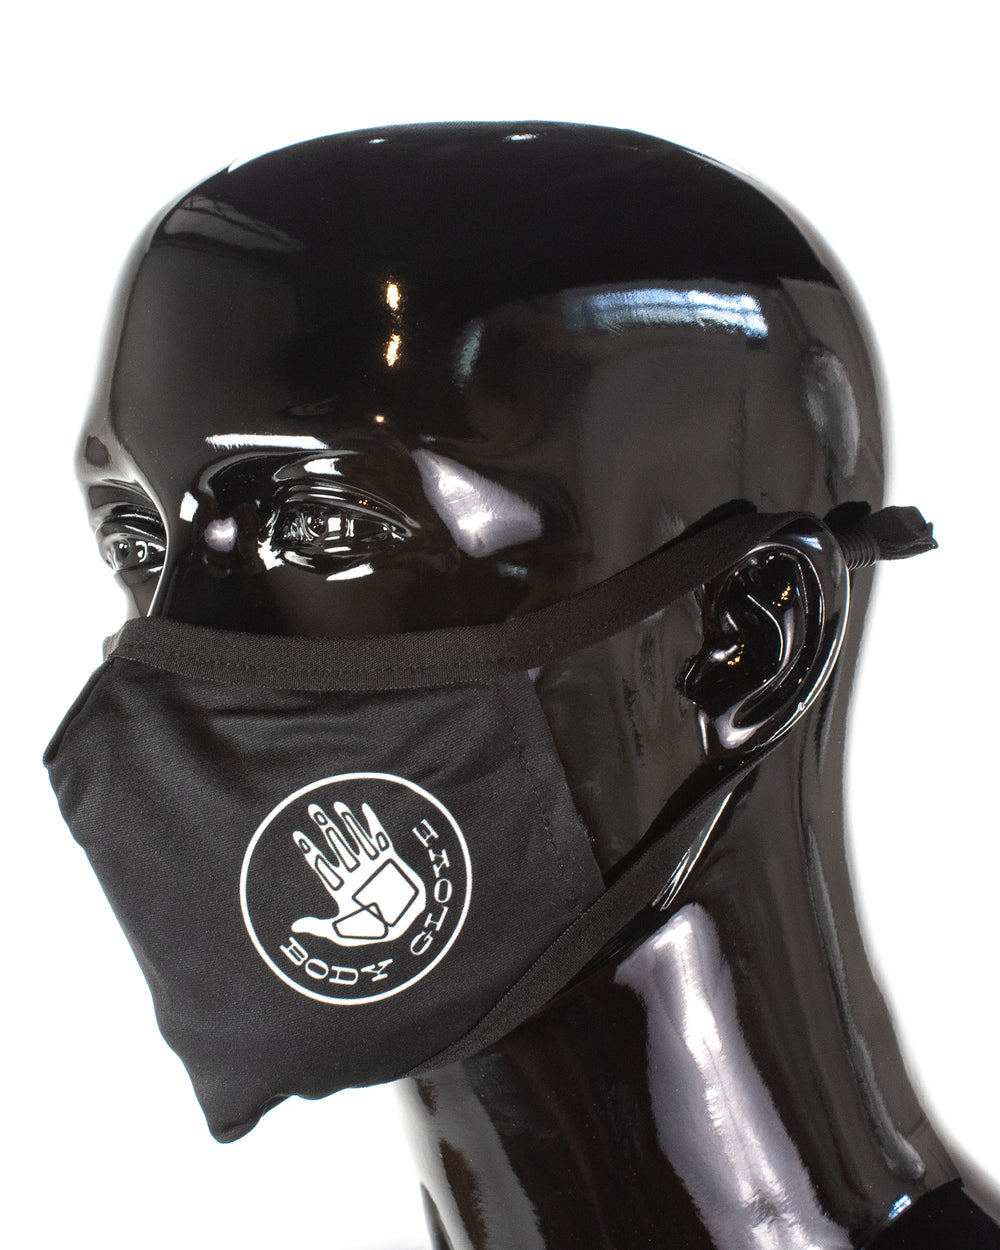 Men's 3-Piece Face Mask Set - Palm, Solid with Logo, Camo